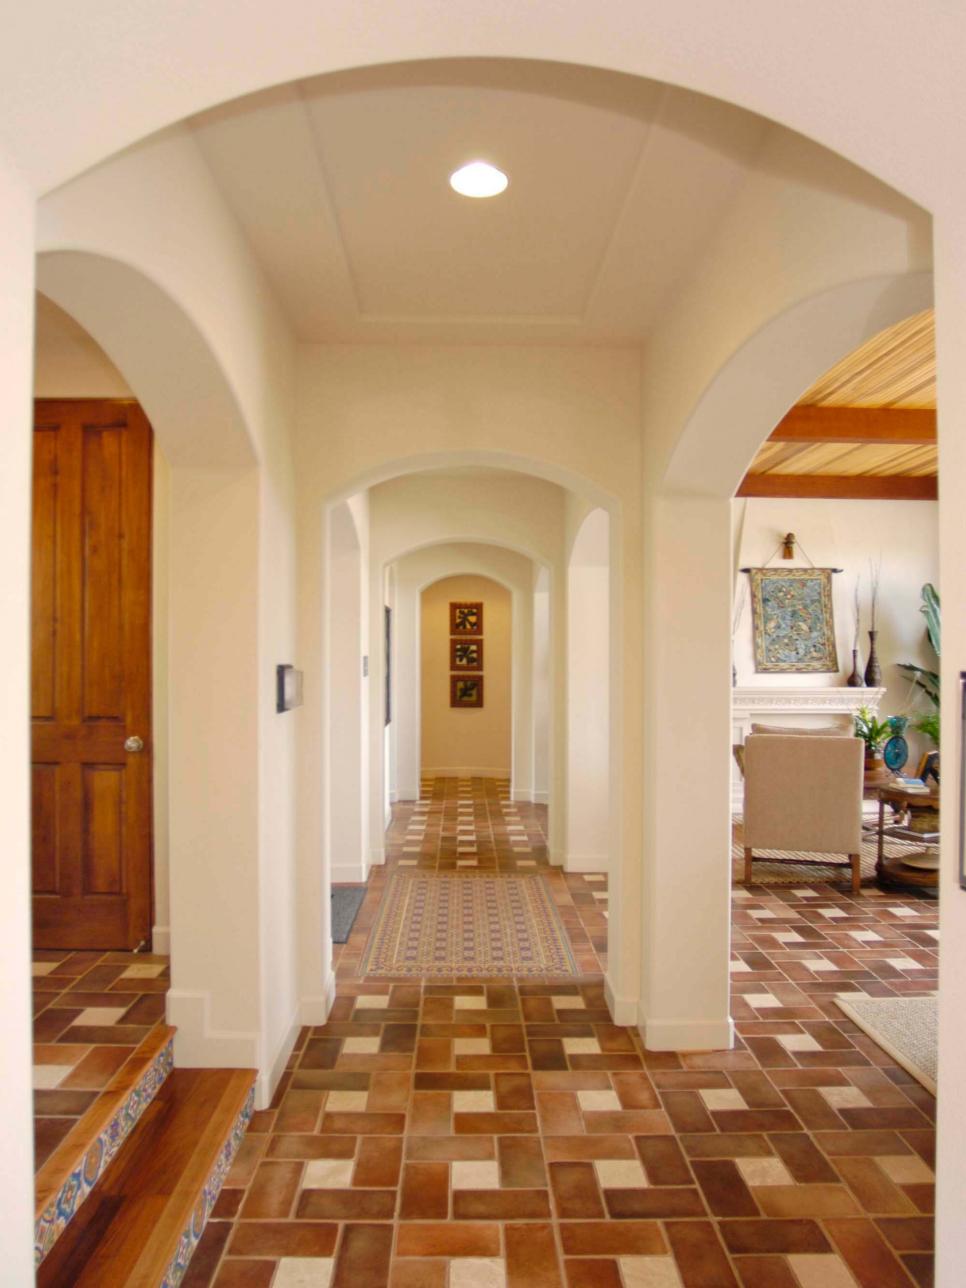 Southwestern Entryway With Unique Tile Floor | HGTV